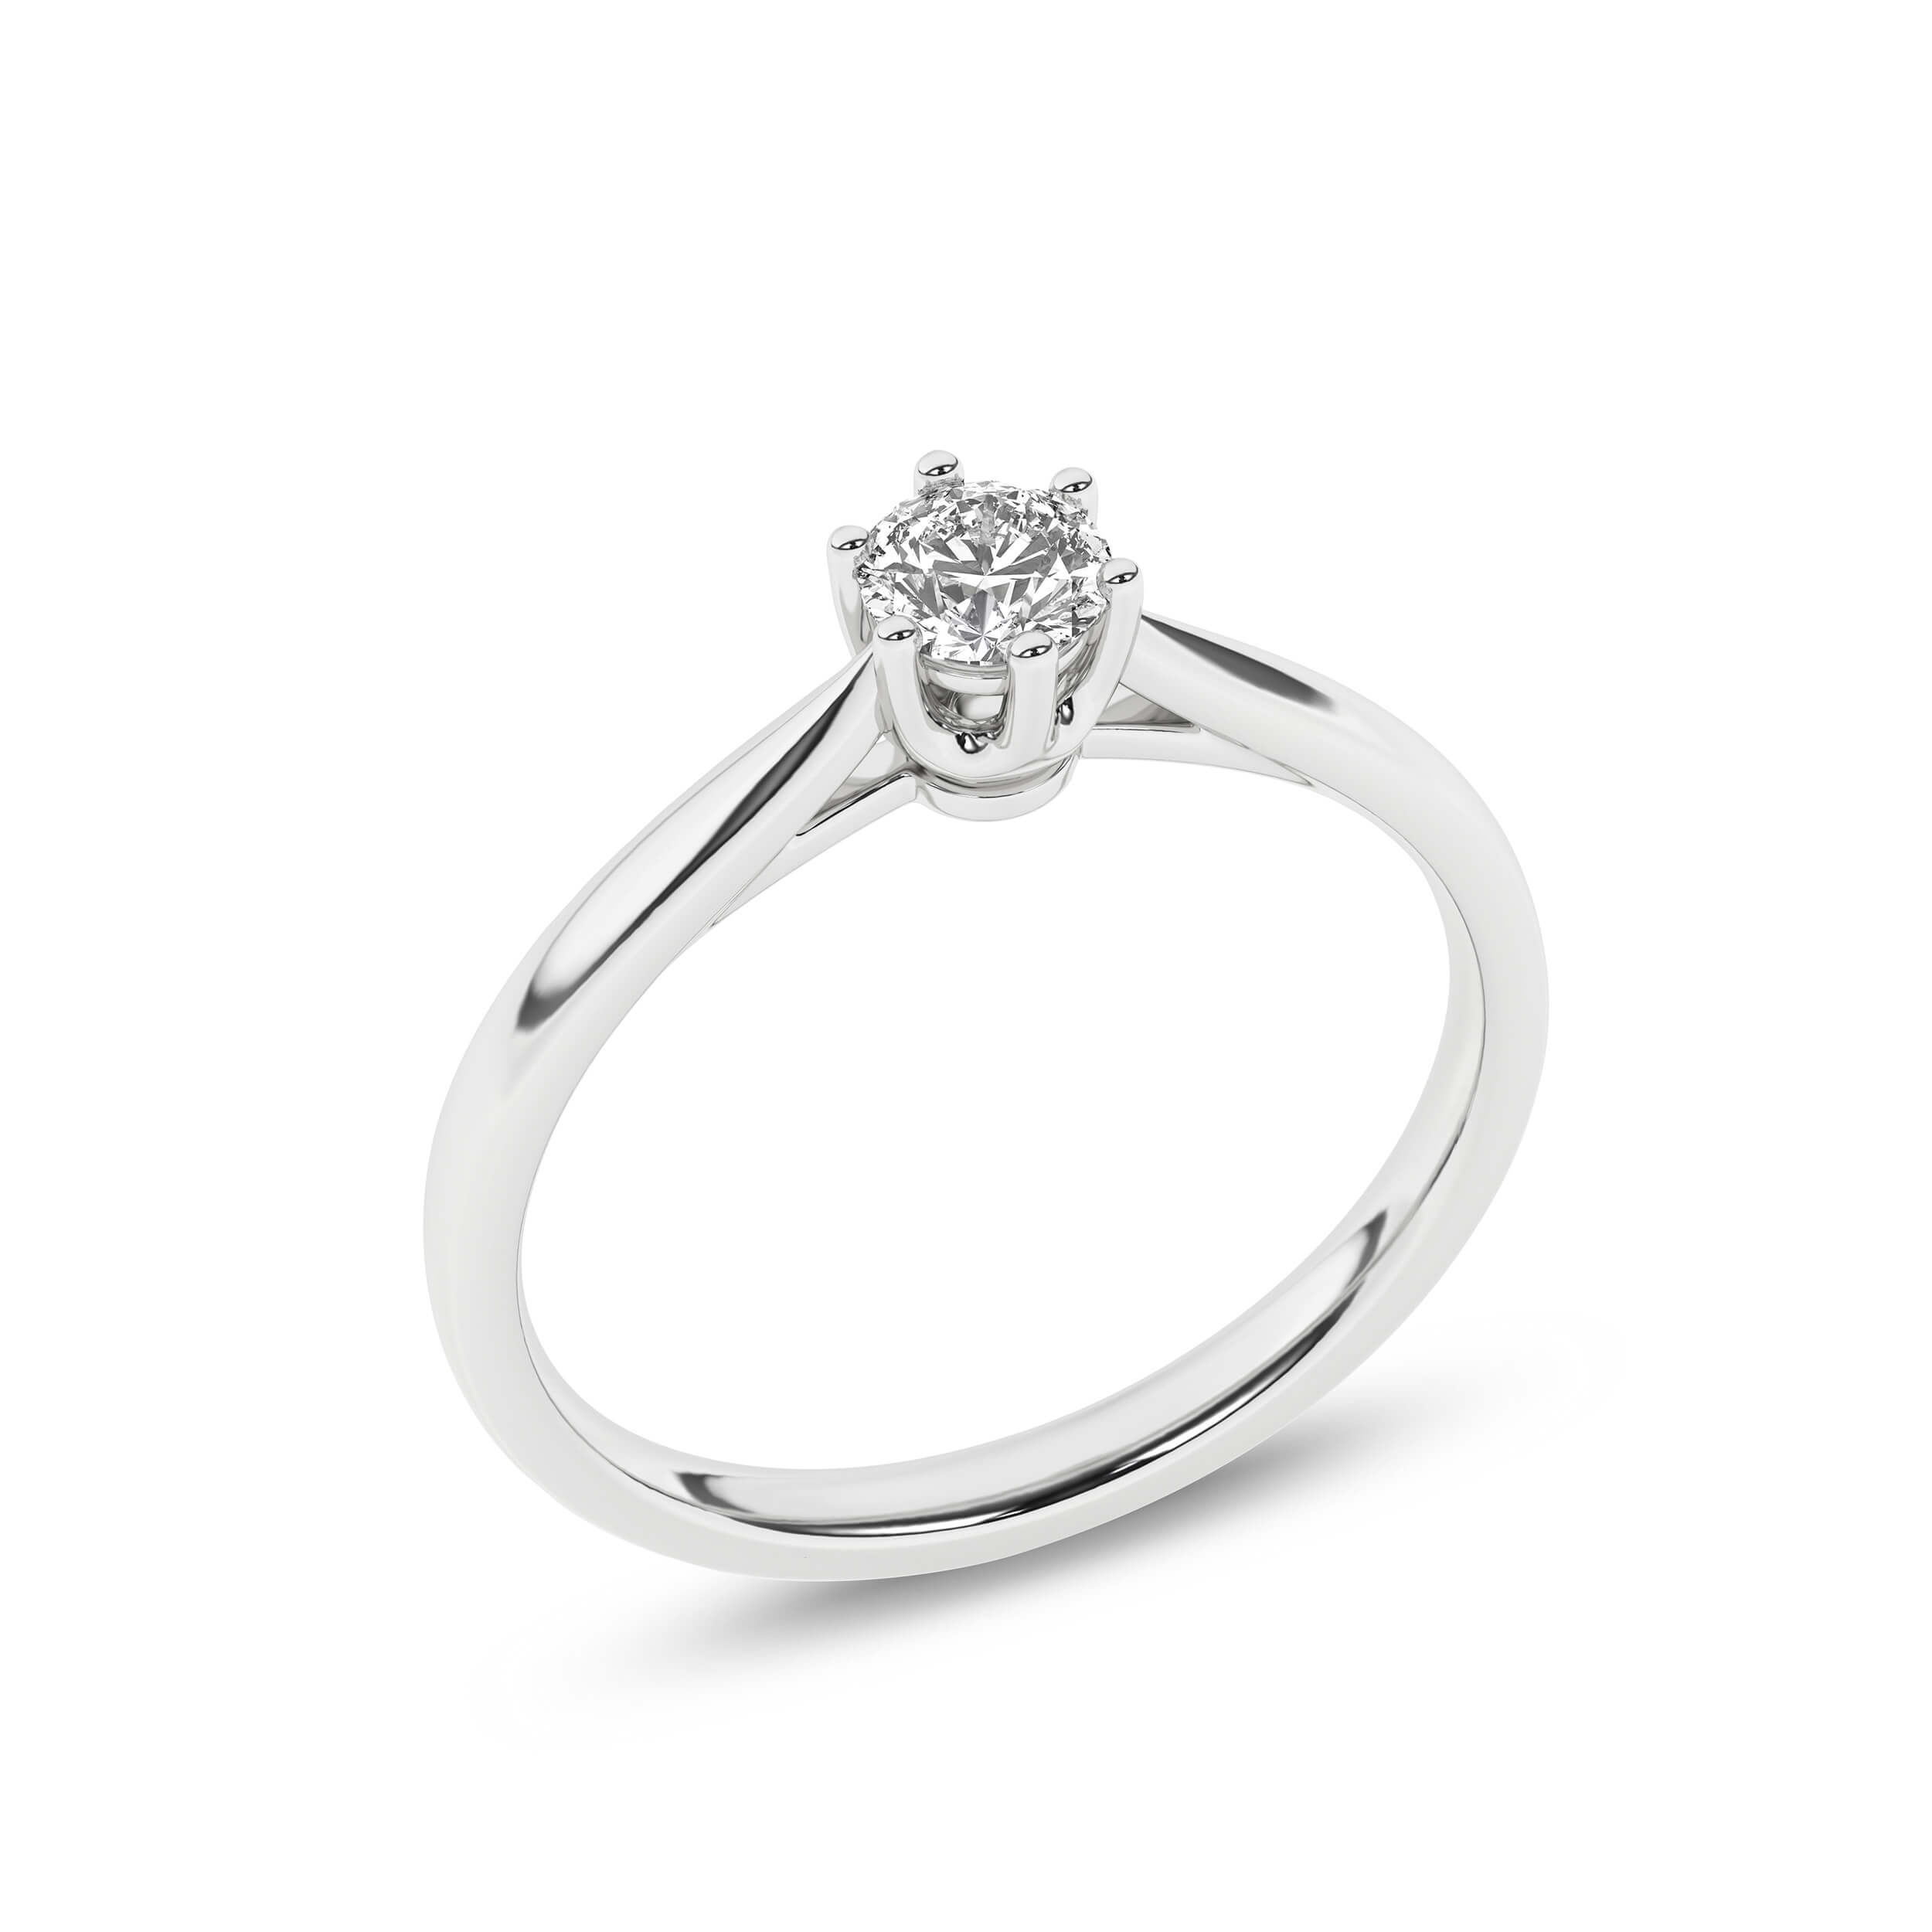 Inel de logodna din Aur Alb 14K cu Diamant 0.25Ct, articol RS1477, previzualizare foto 4